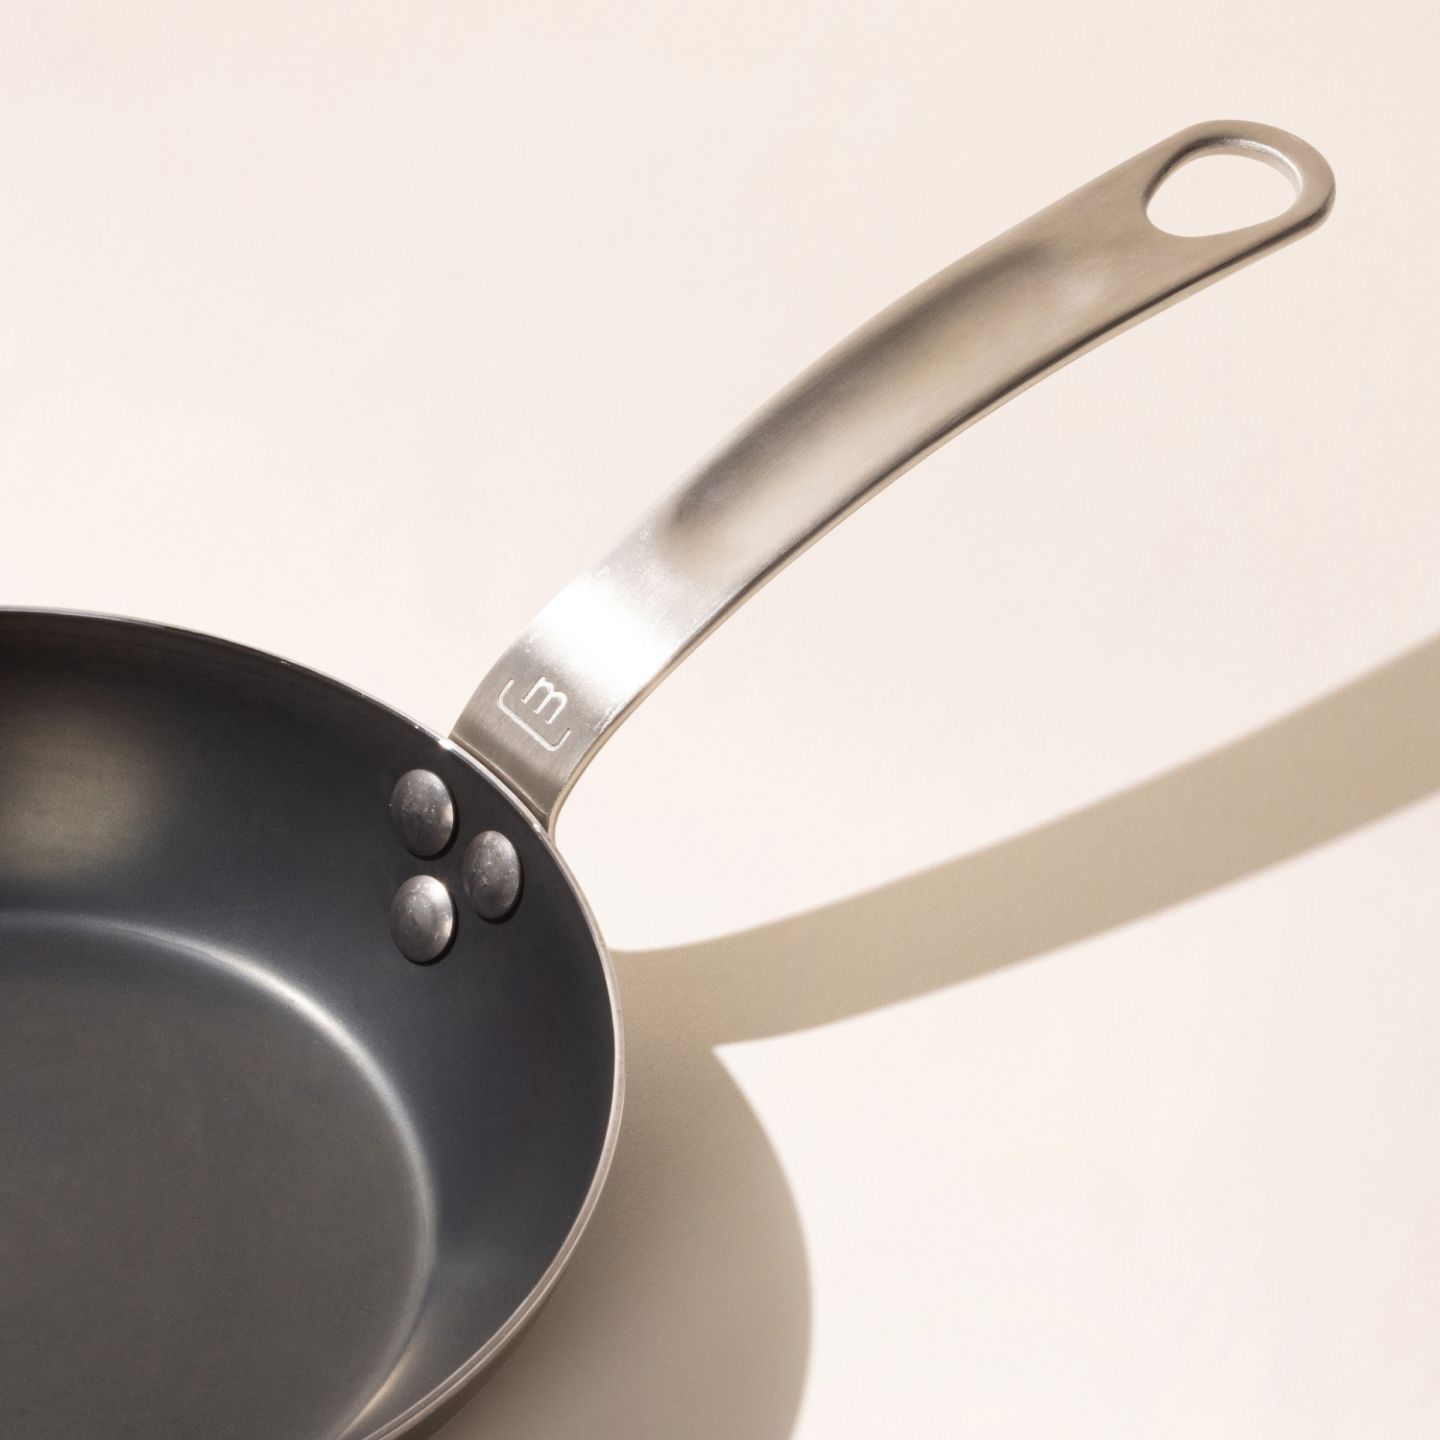 Black Steel Round Frying Pan, Upgraded Version, 12-5/8″ Diam